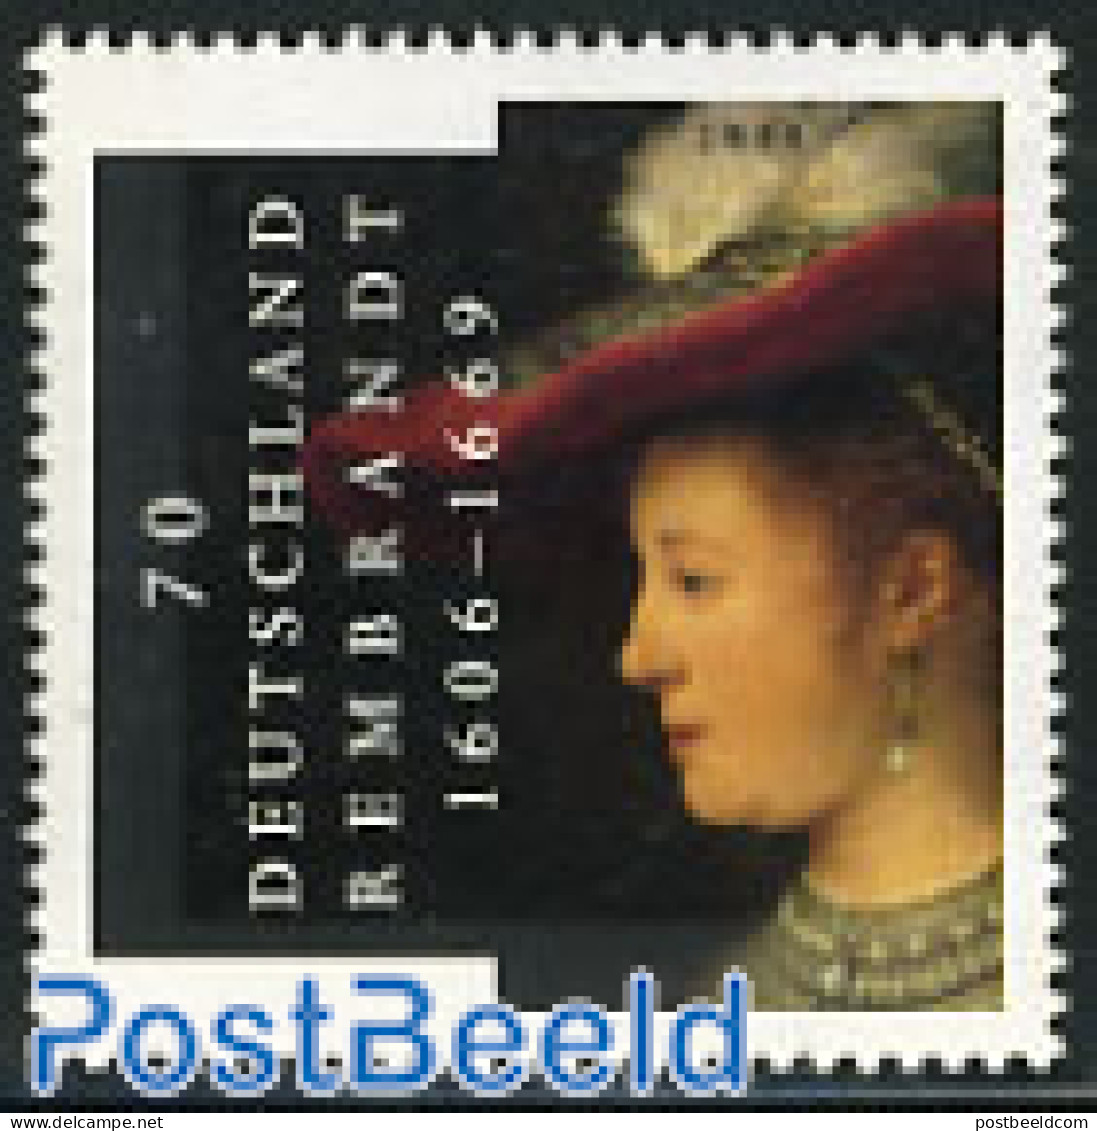 Netherlands 2006 Rembrandt 1v (Only Valid For Postage In Netherland, Mint NH, Art - Paintings - Rembrandt - Nuovi